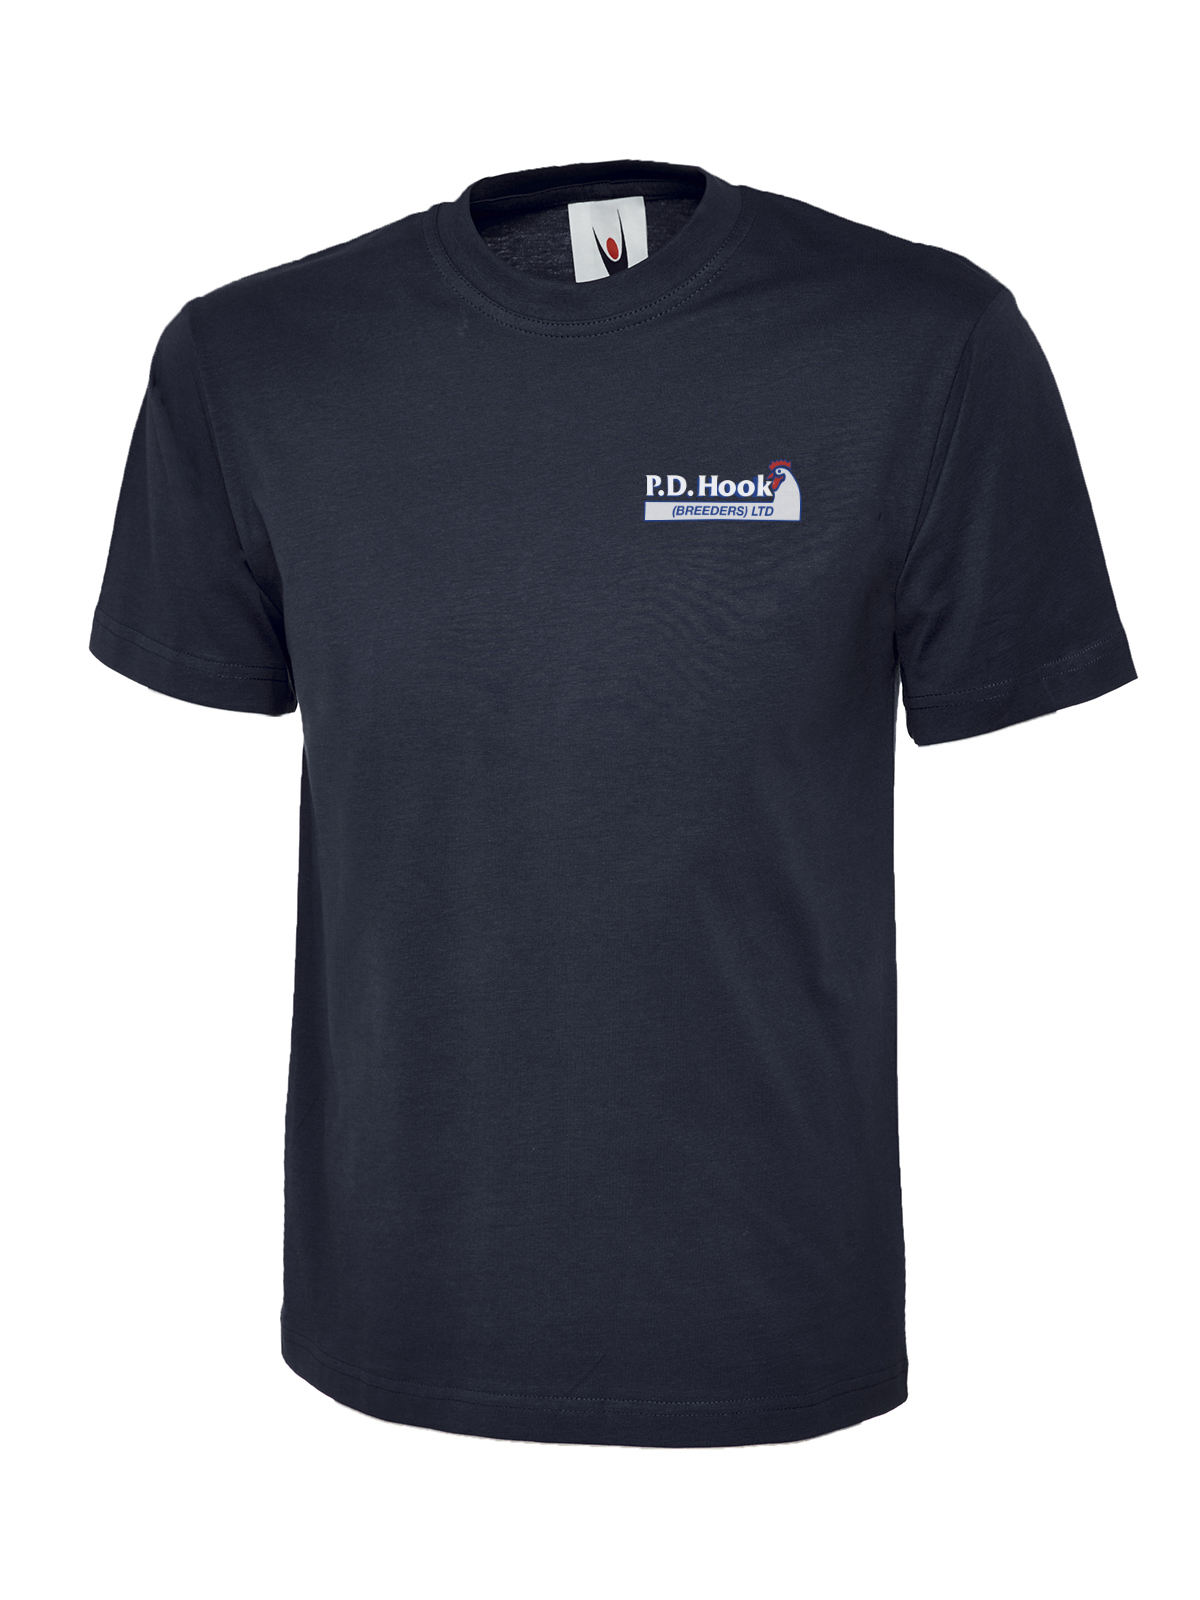 P D Hook (Breeders) Ltd - T-Shirt, Navy - Size 5XL